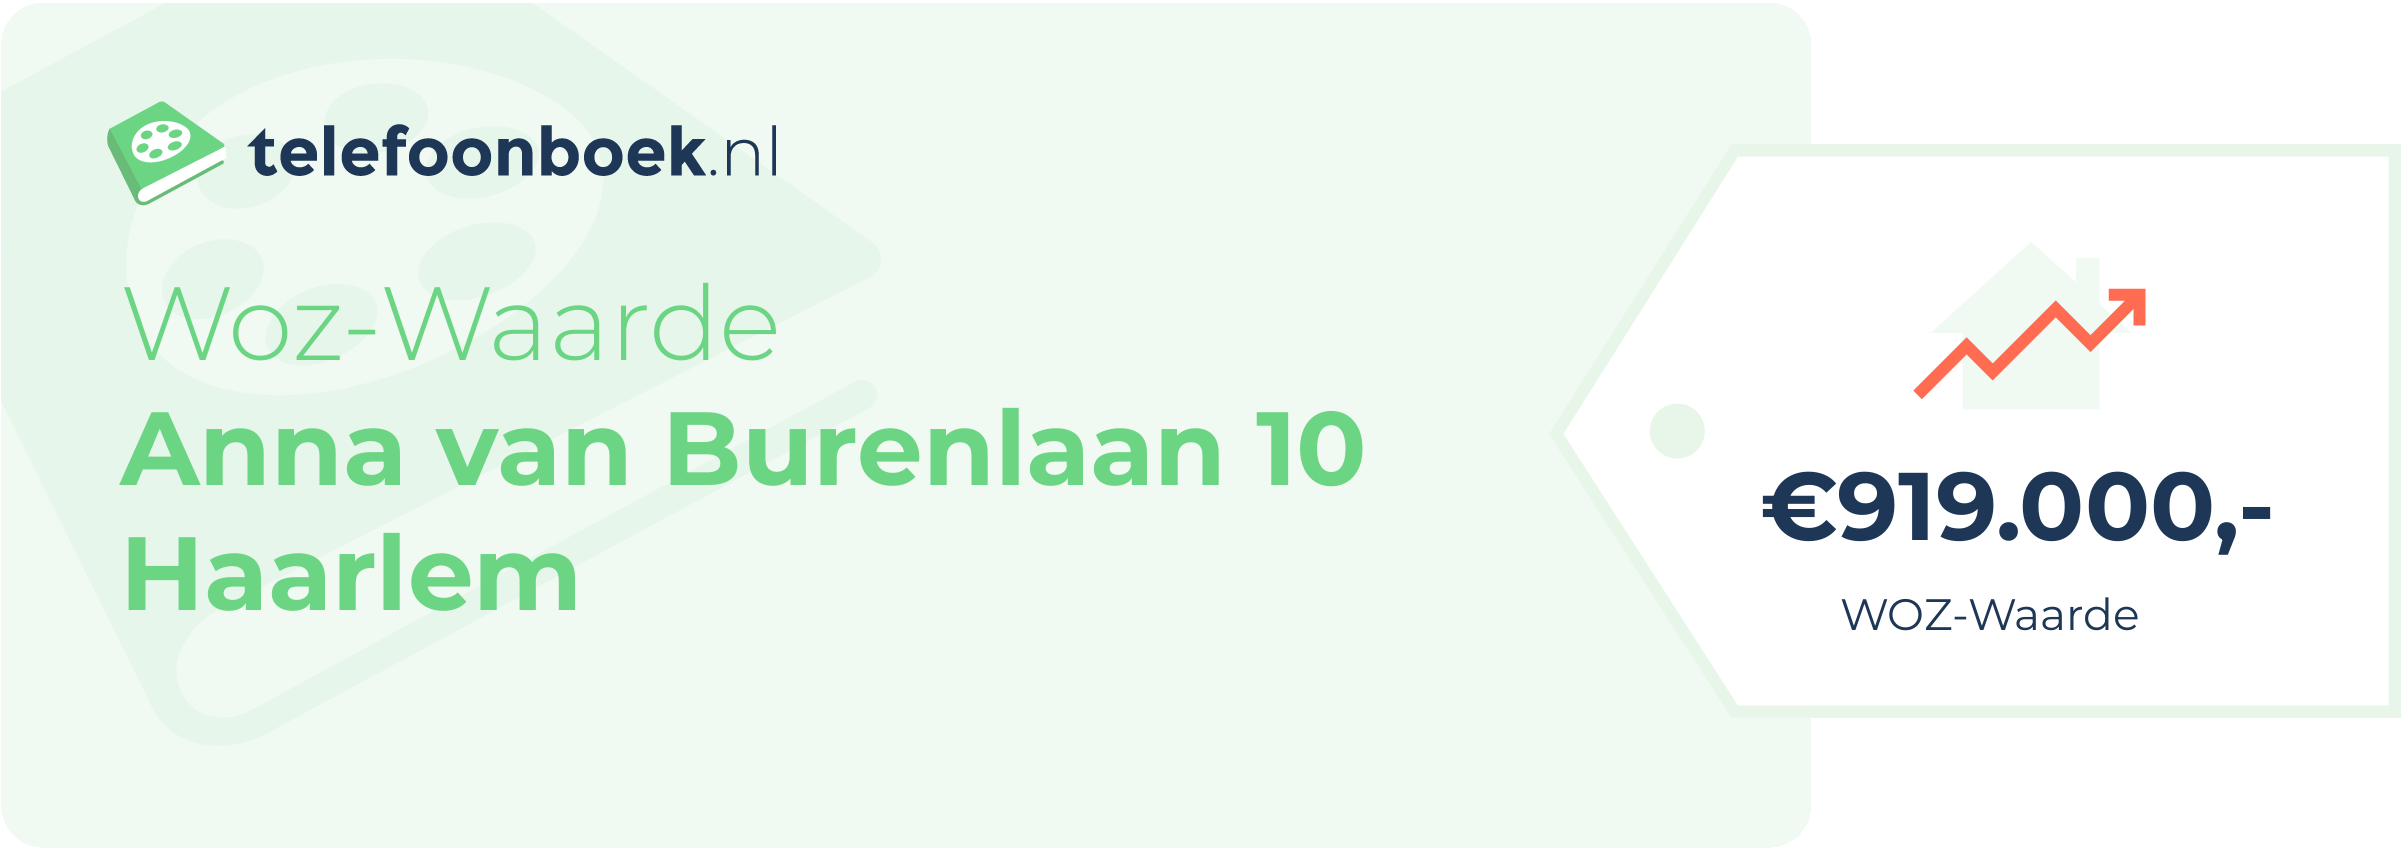 WOZ-waarde Anna Van Burenlaan 10 Haarlem